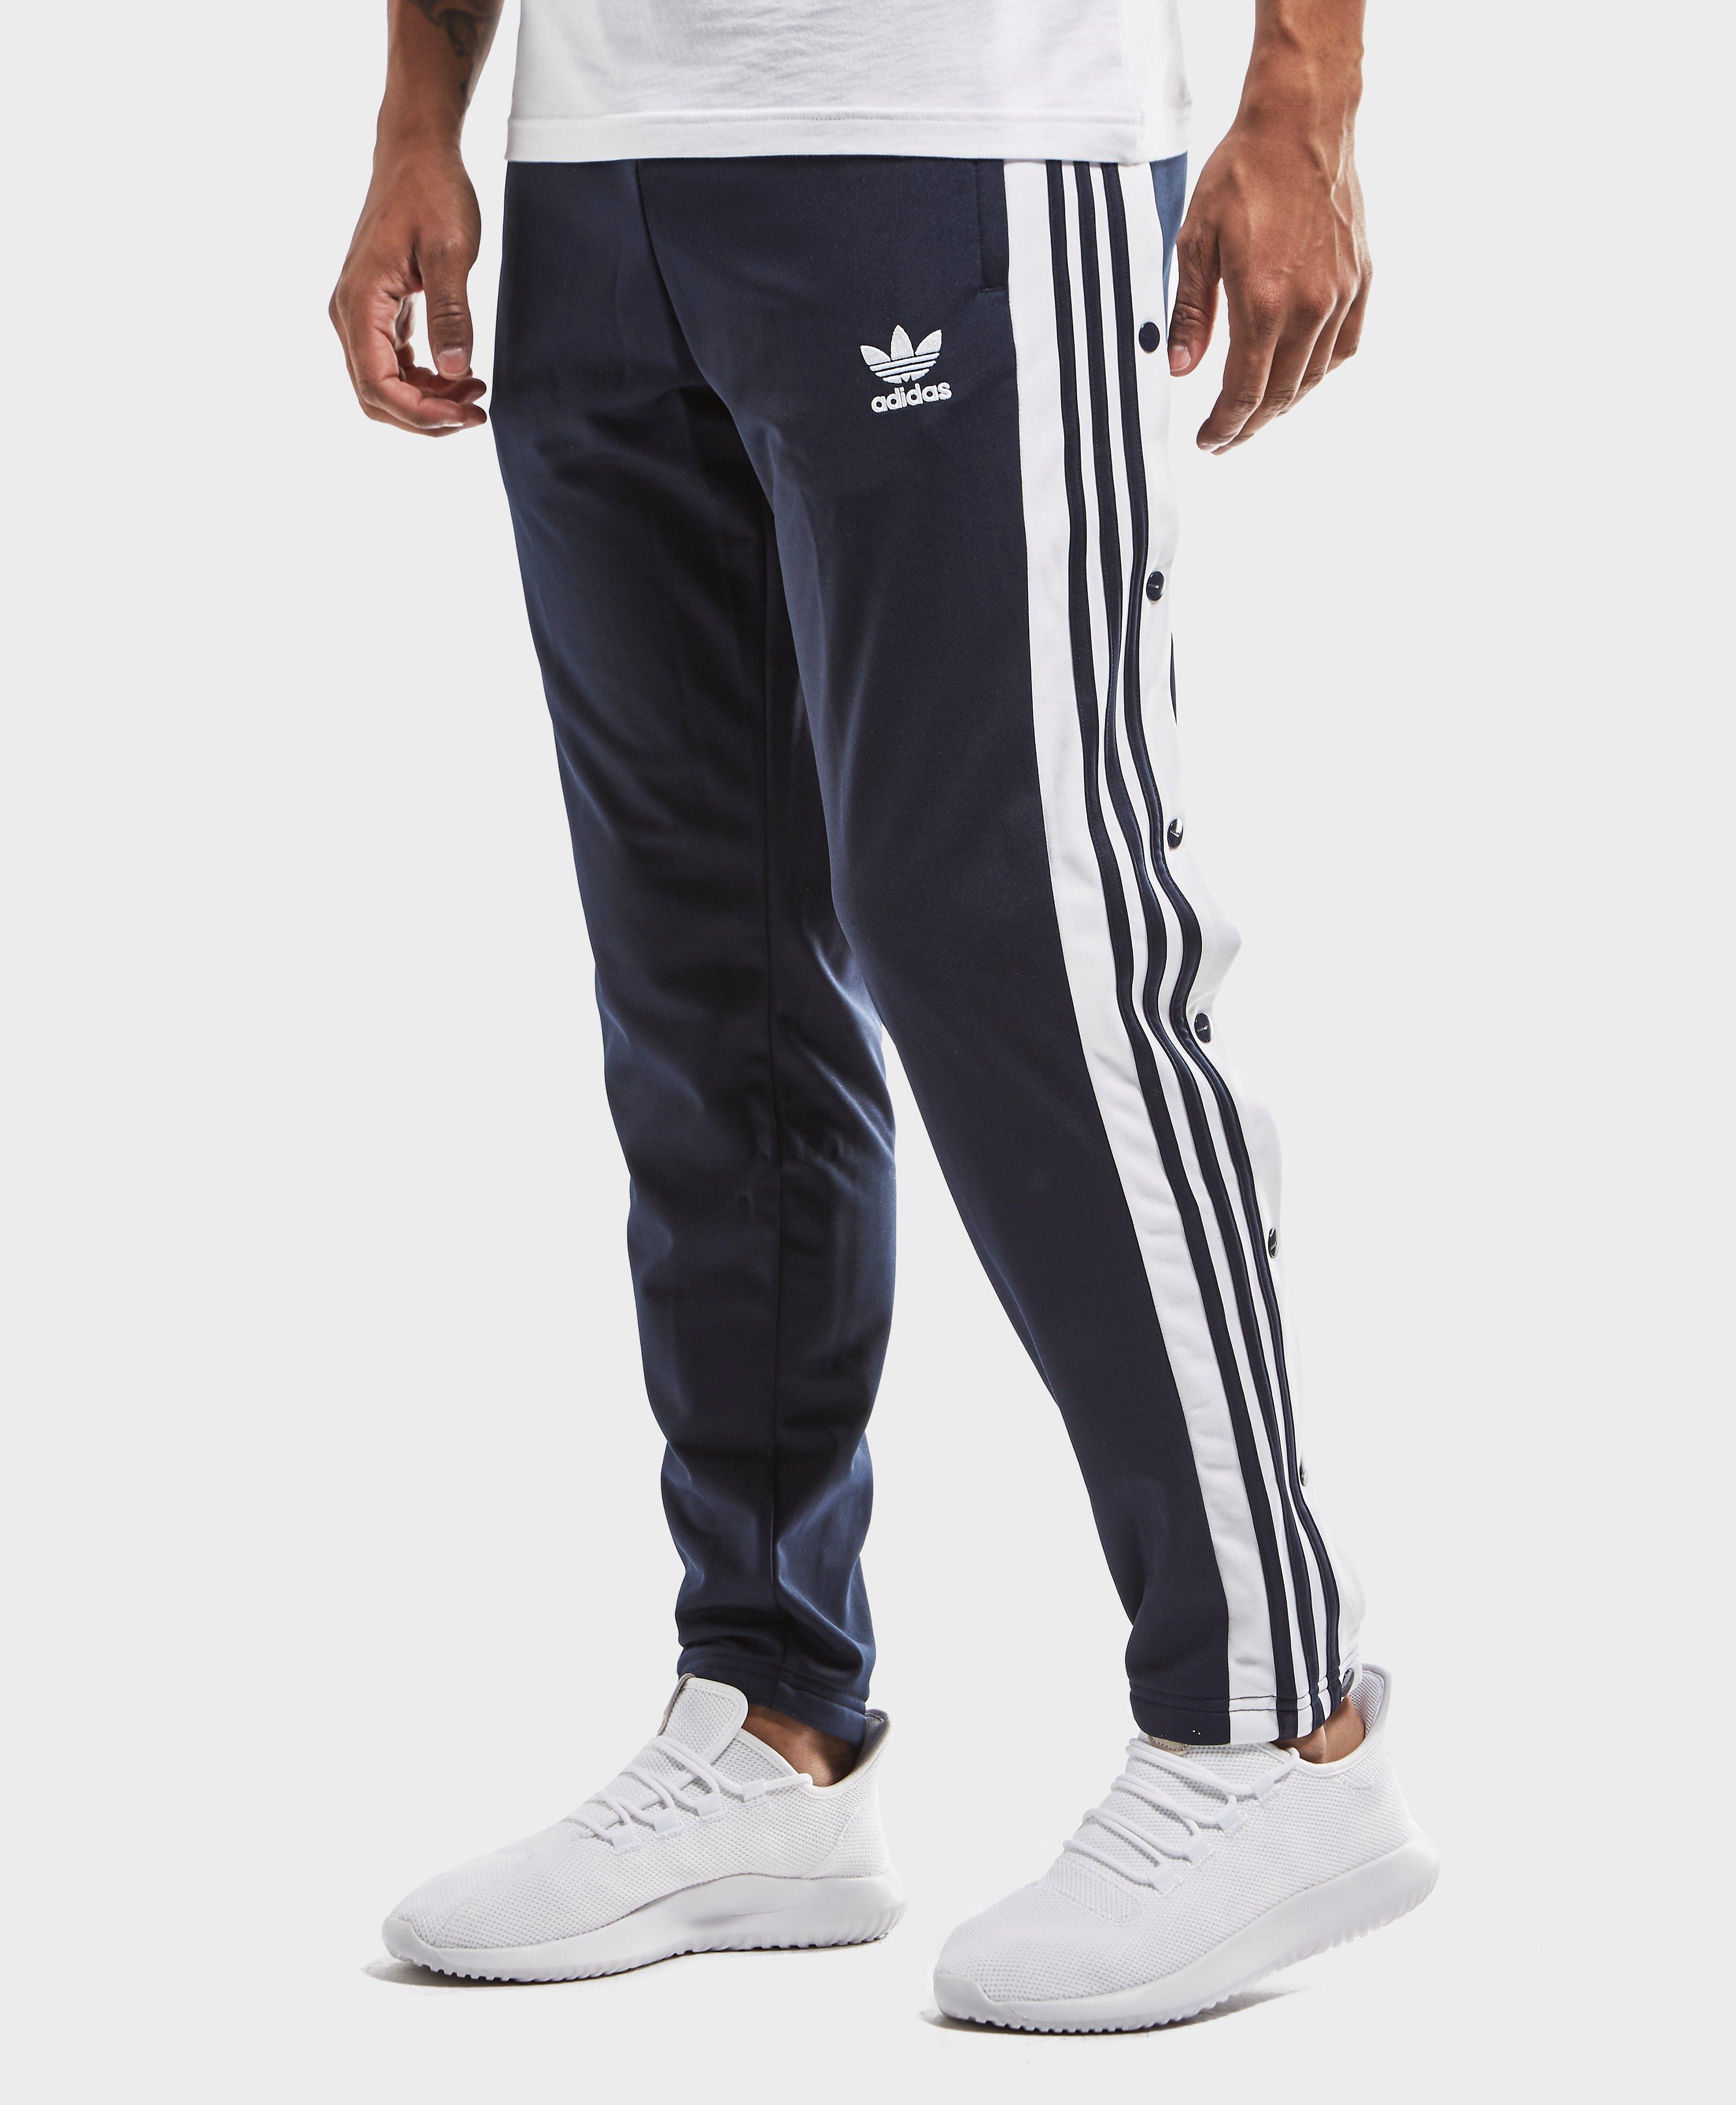 Lyst - Adidas Originals Adibreak Popper Track Pants in Blue for Men